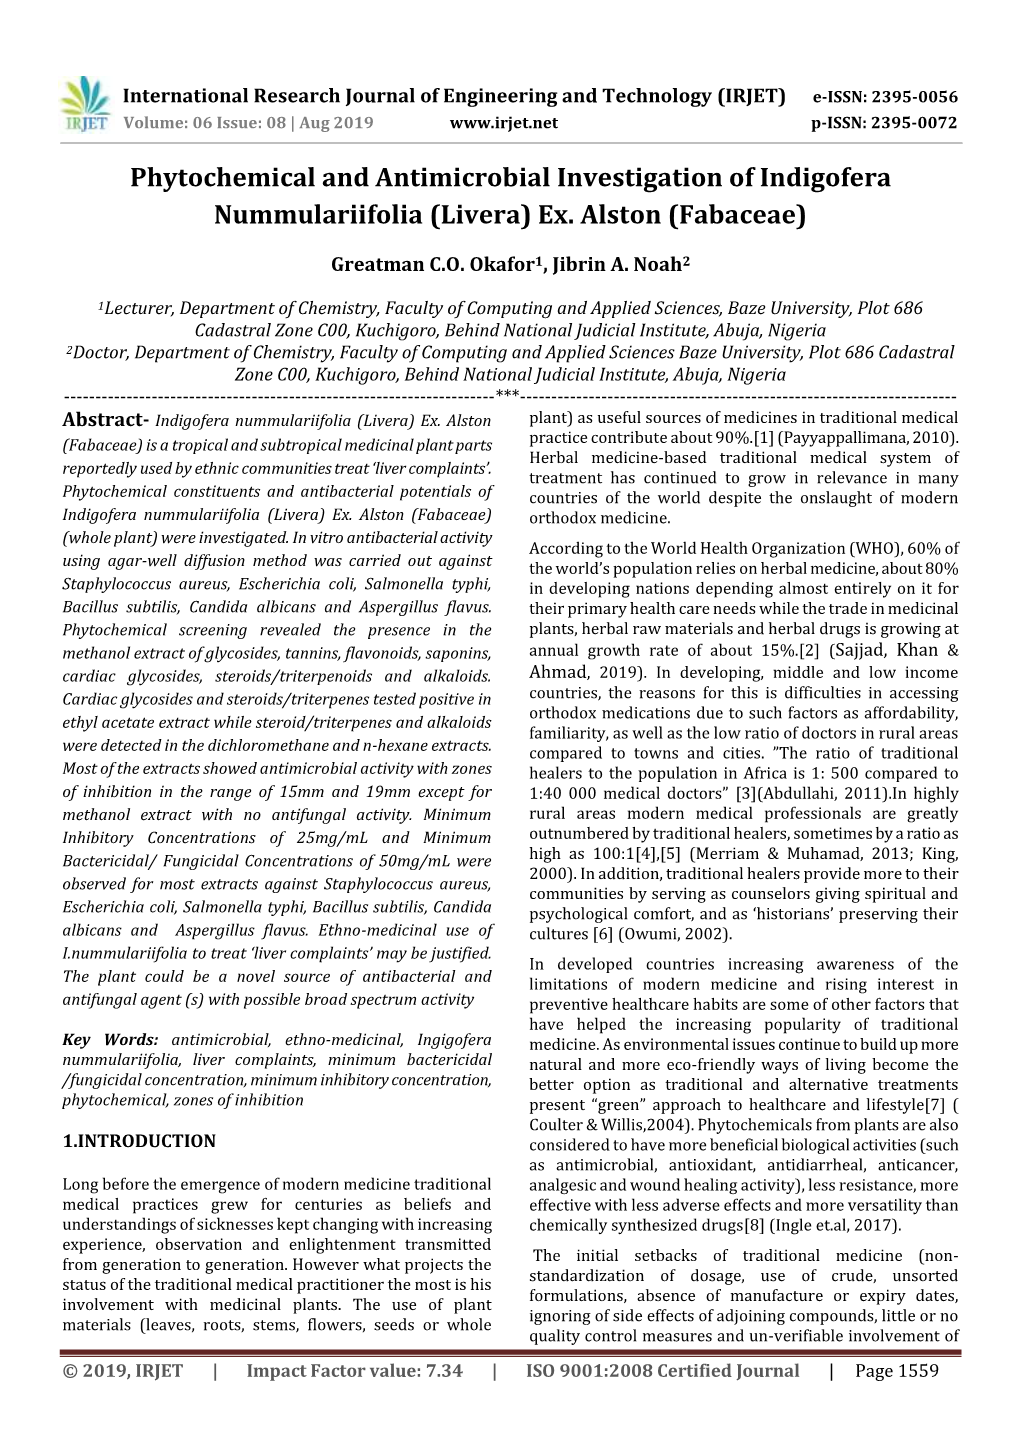 Phytochemical and Antimicrobial Investigation of Indigofera Nummulariifolia (Livera) Ex